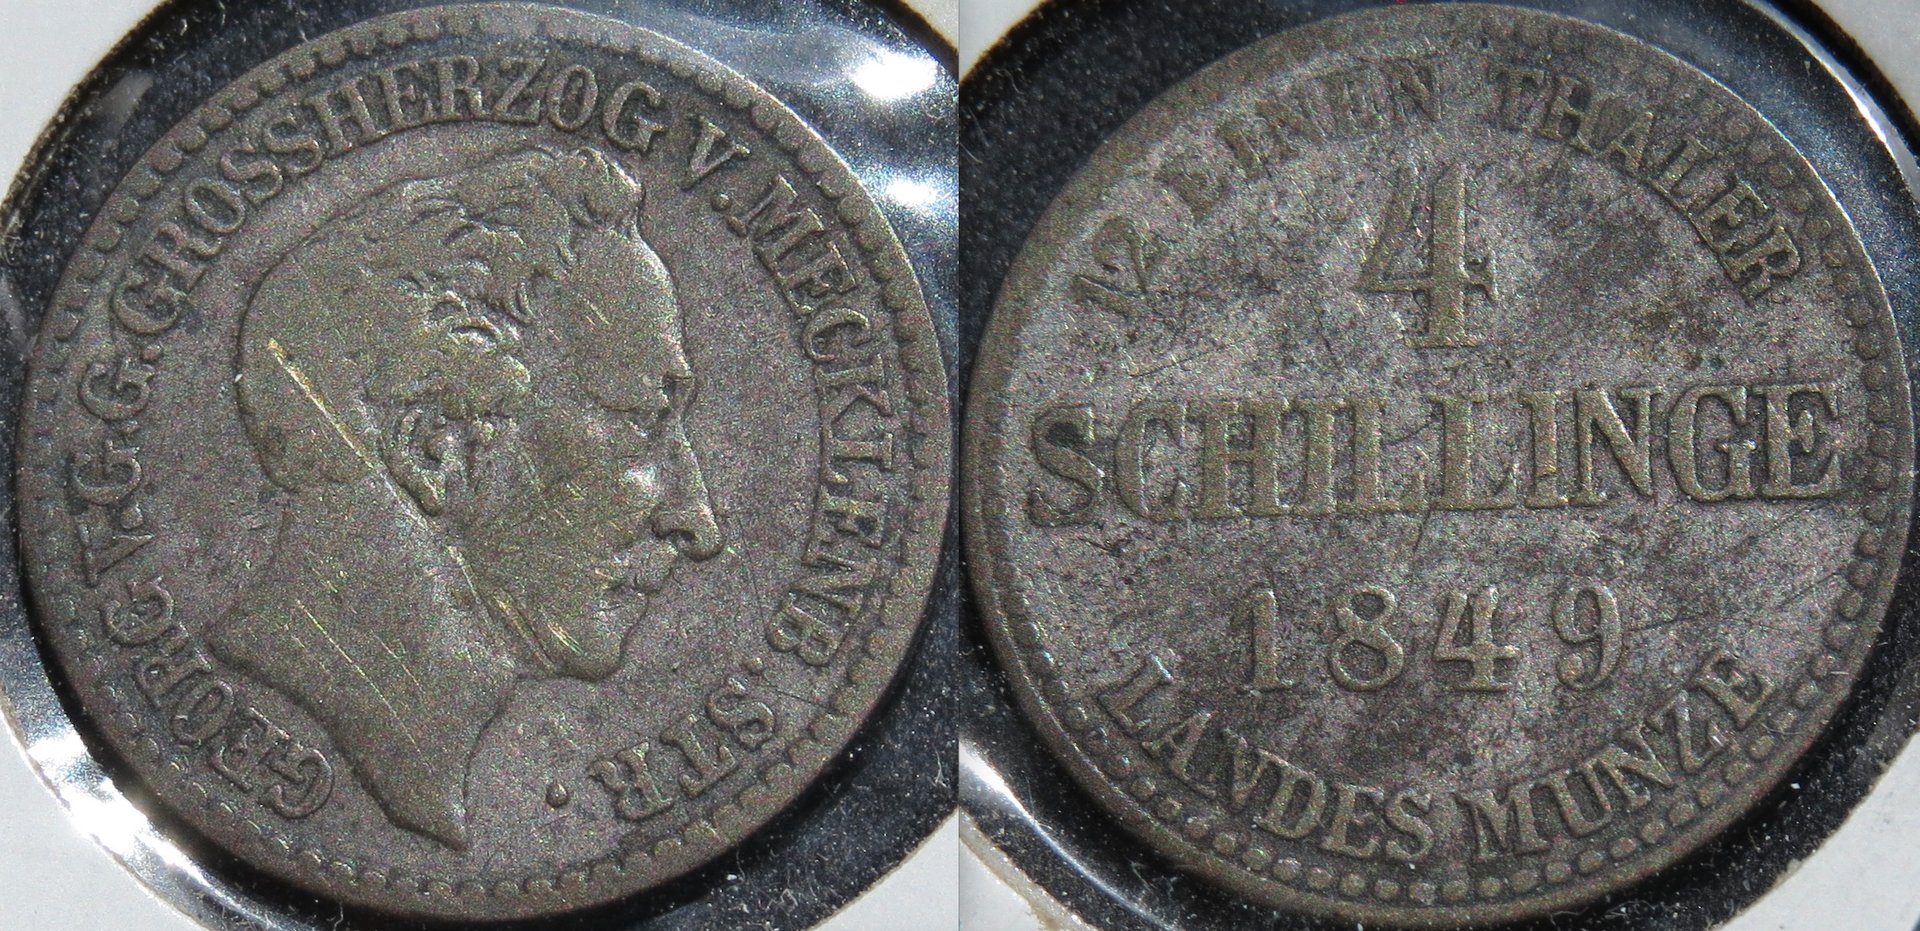 Meklenburg-Strelitz 1849 4 Schillinge Georg 0.375 billon.jpeg